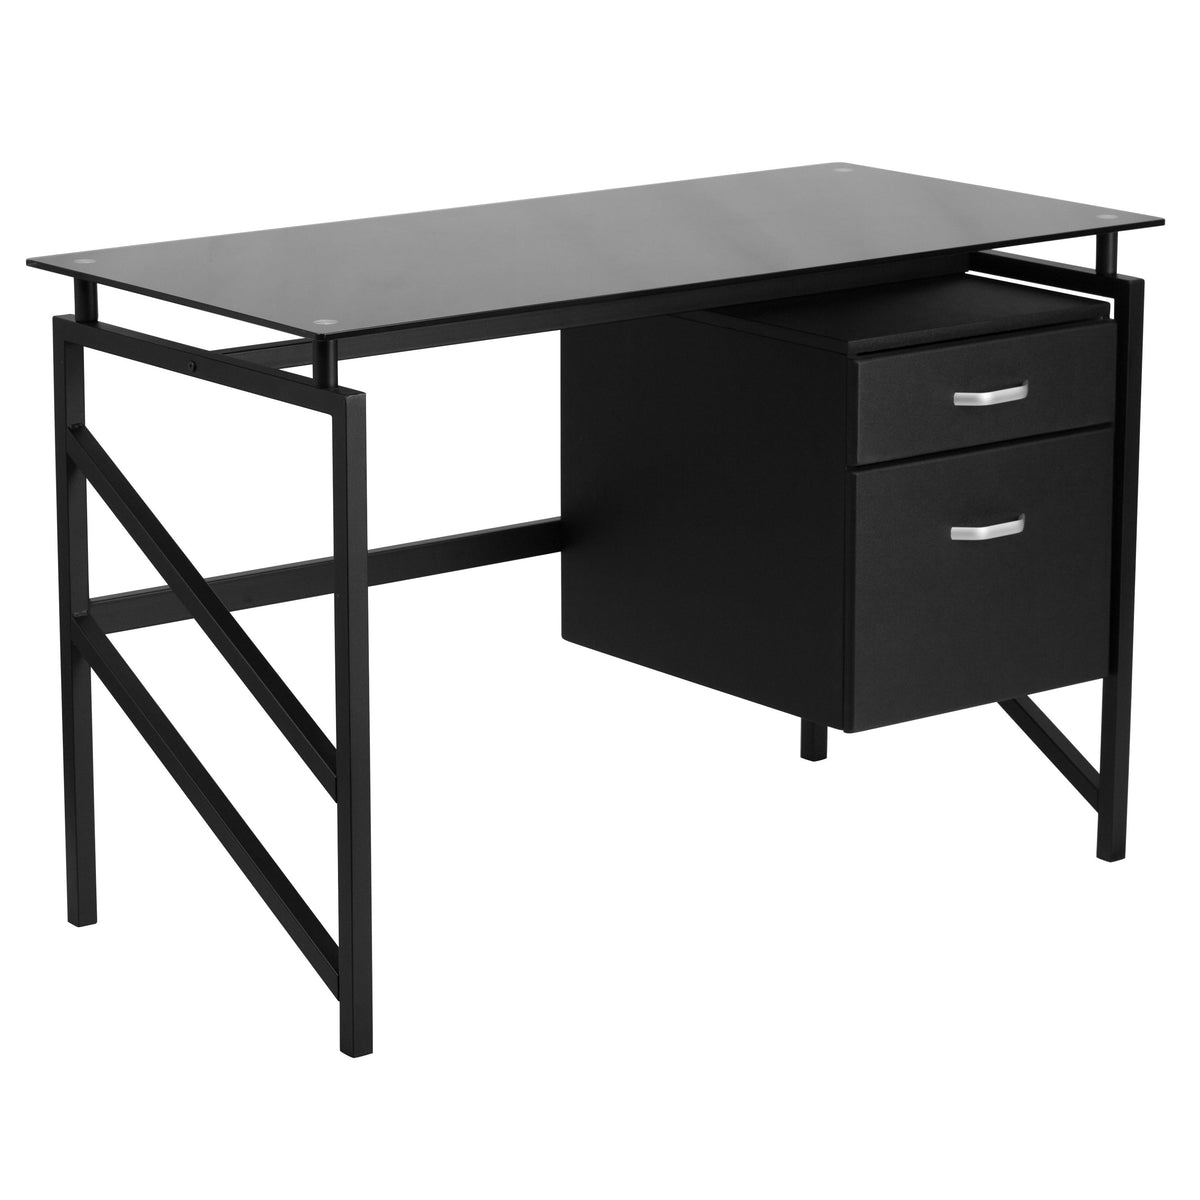 Two Drawer Pedestal Desk with Black Tempered Glass Top and Black Metal Frame